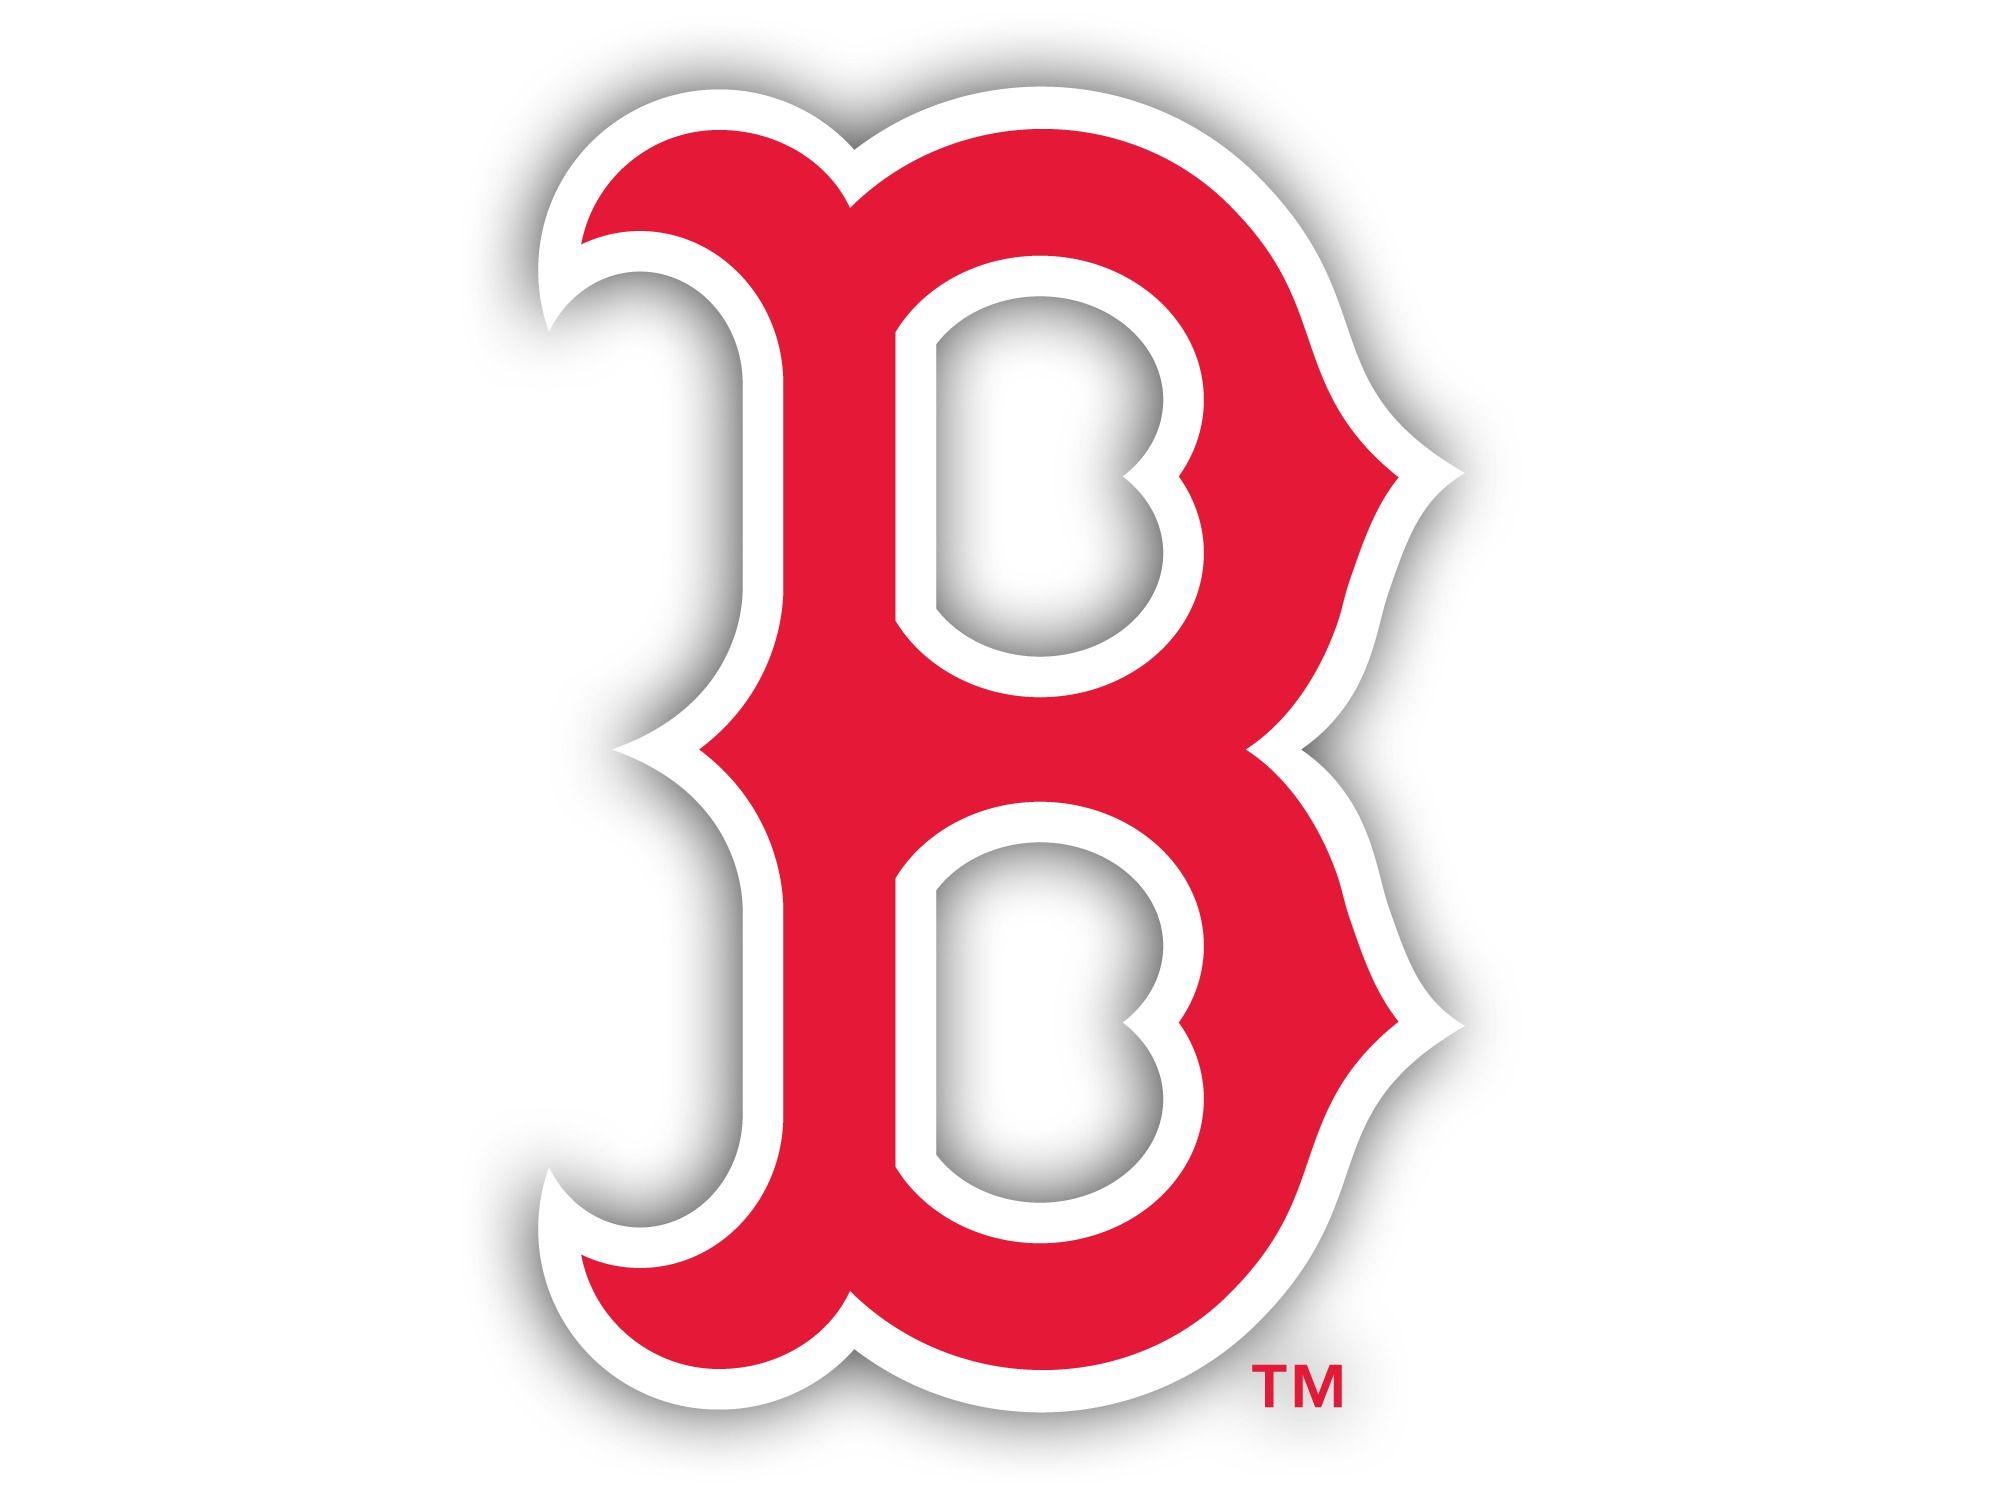 Red Socks Logo - Free Red Sox Logo Jpg, Download Free Clip Art, Free Clip Art on ...